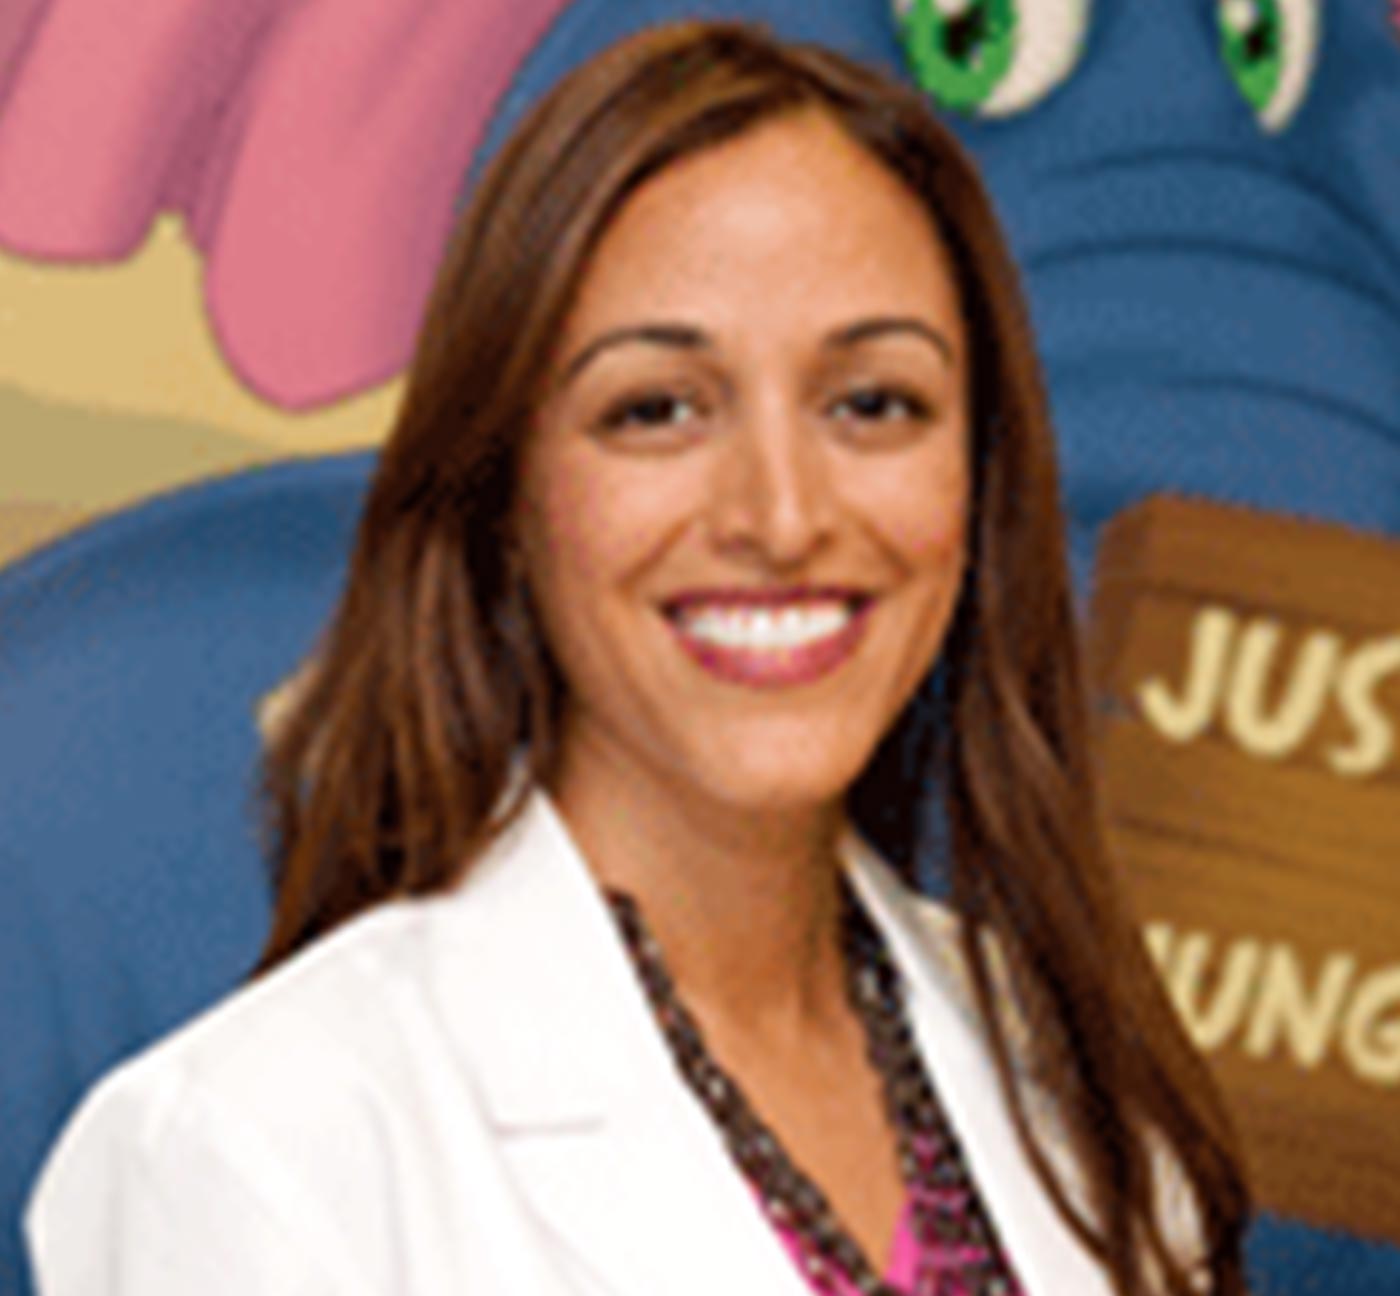 Dallas Pediatric Dentist - Dallas Pediatric Dentistry - Just Kids Dental - Monali Patel, DDS